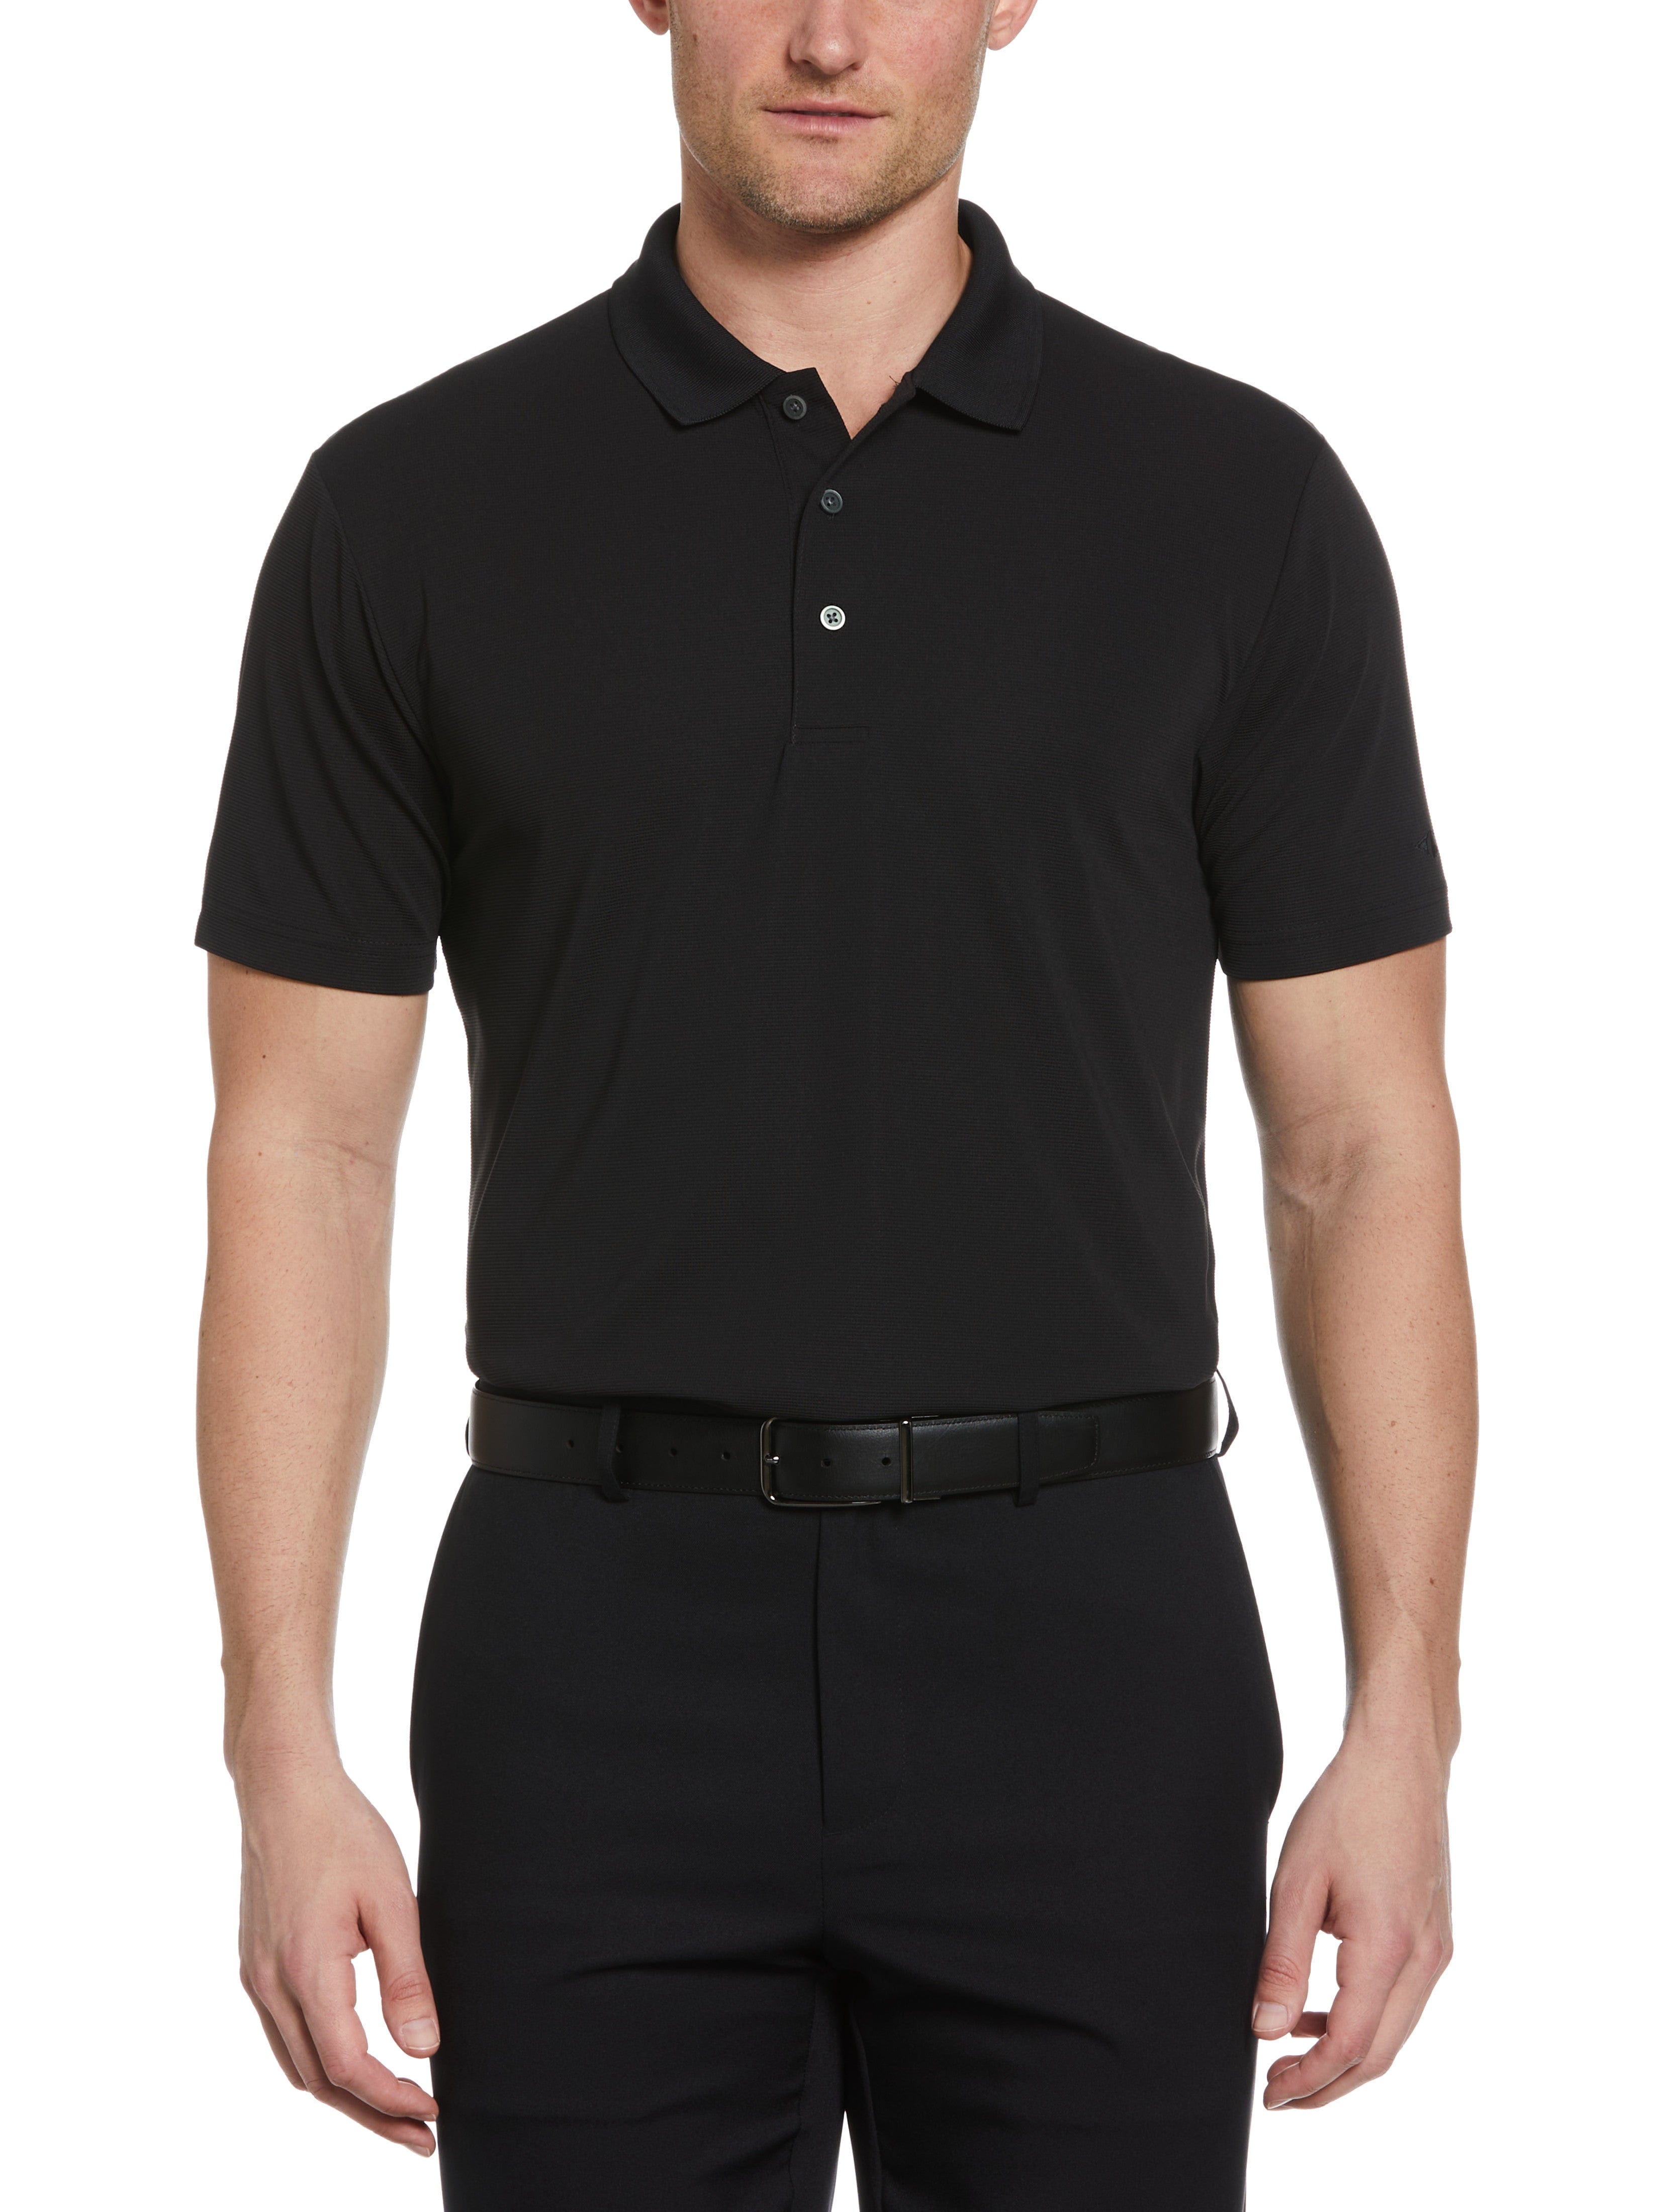 Grand Slam Mens Mini Ottoman Textured Polo Shirt, Size Large, Black, 100% Polyester | Golf Apparel Shop